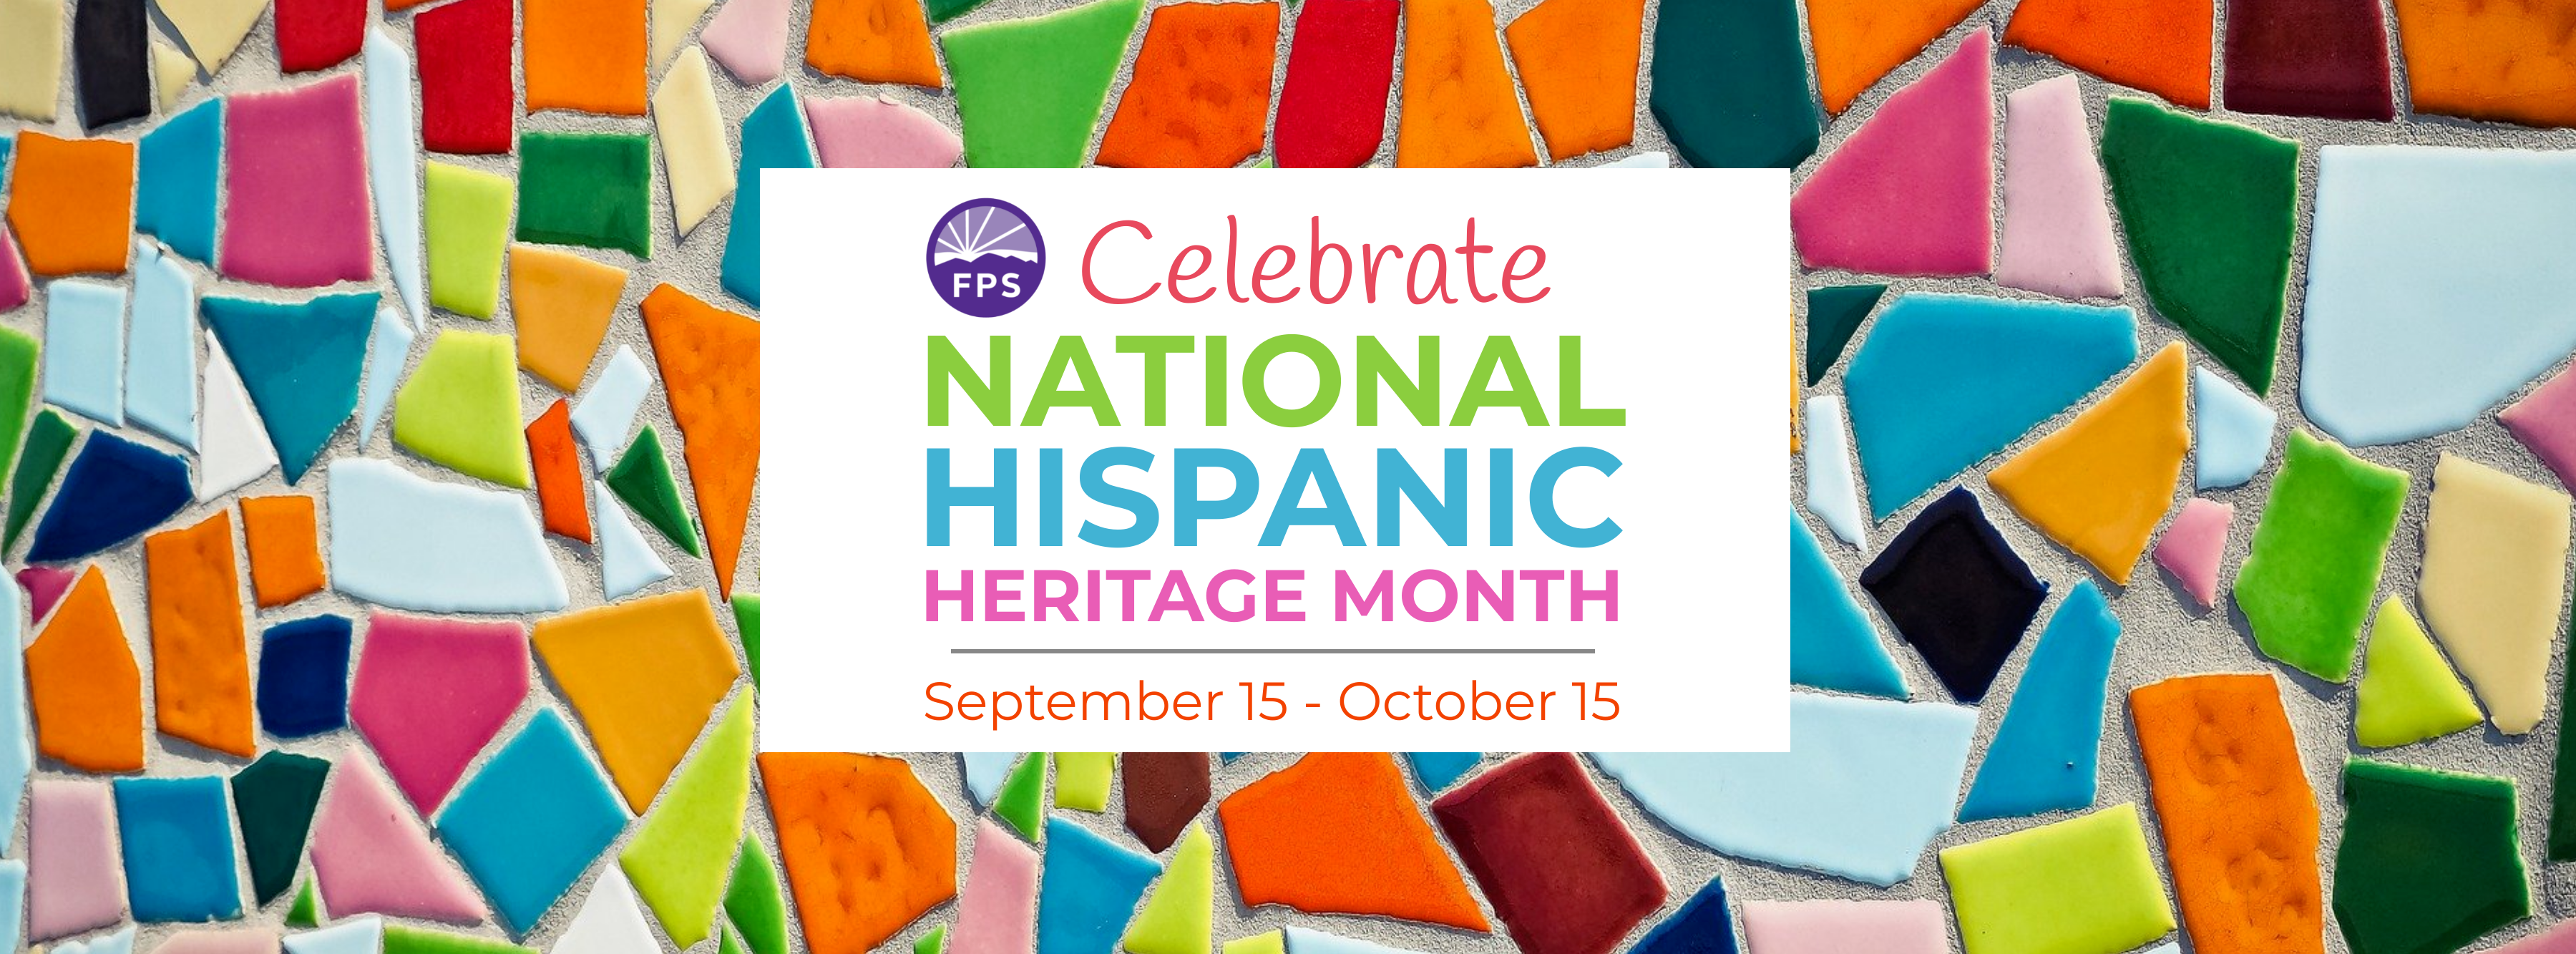 Celebrate National Hispanic Heritage Month - Sept 15 - Oct 15